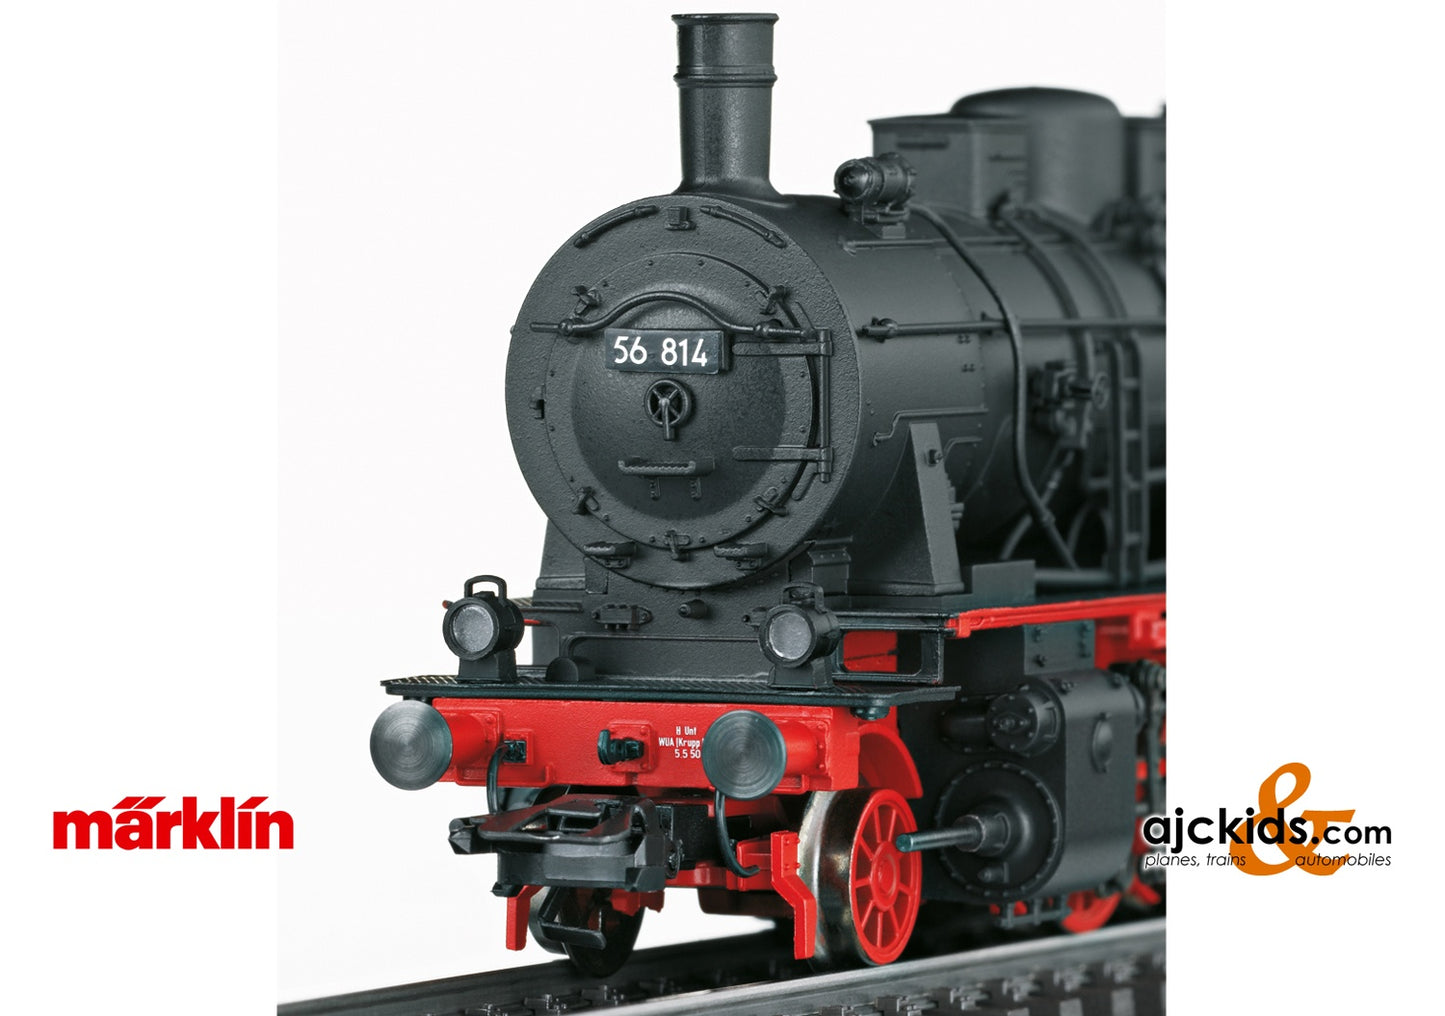 Marklin 37518 - Class 56 Steam Locomotive at Ajckids.com